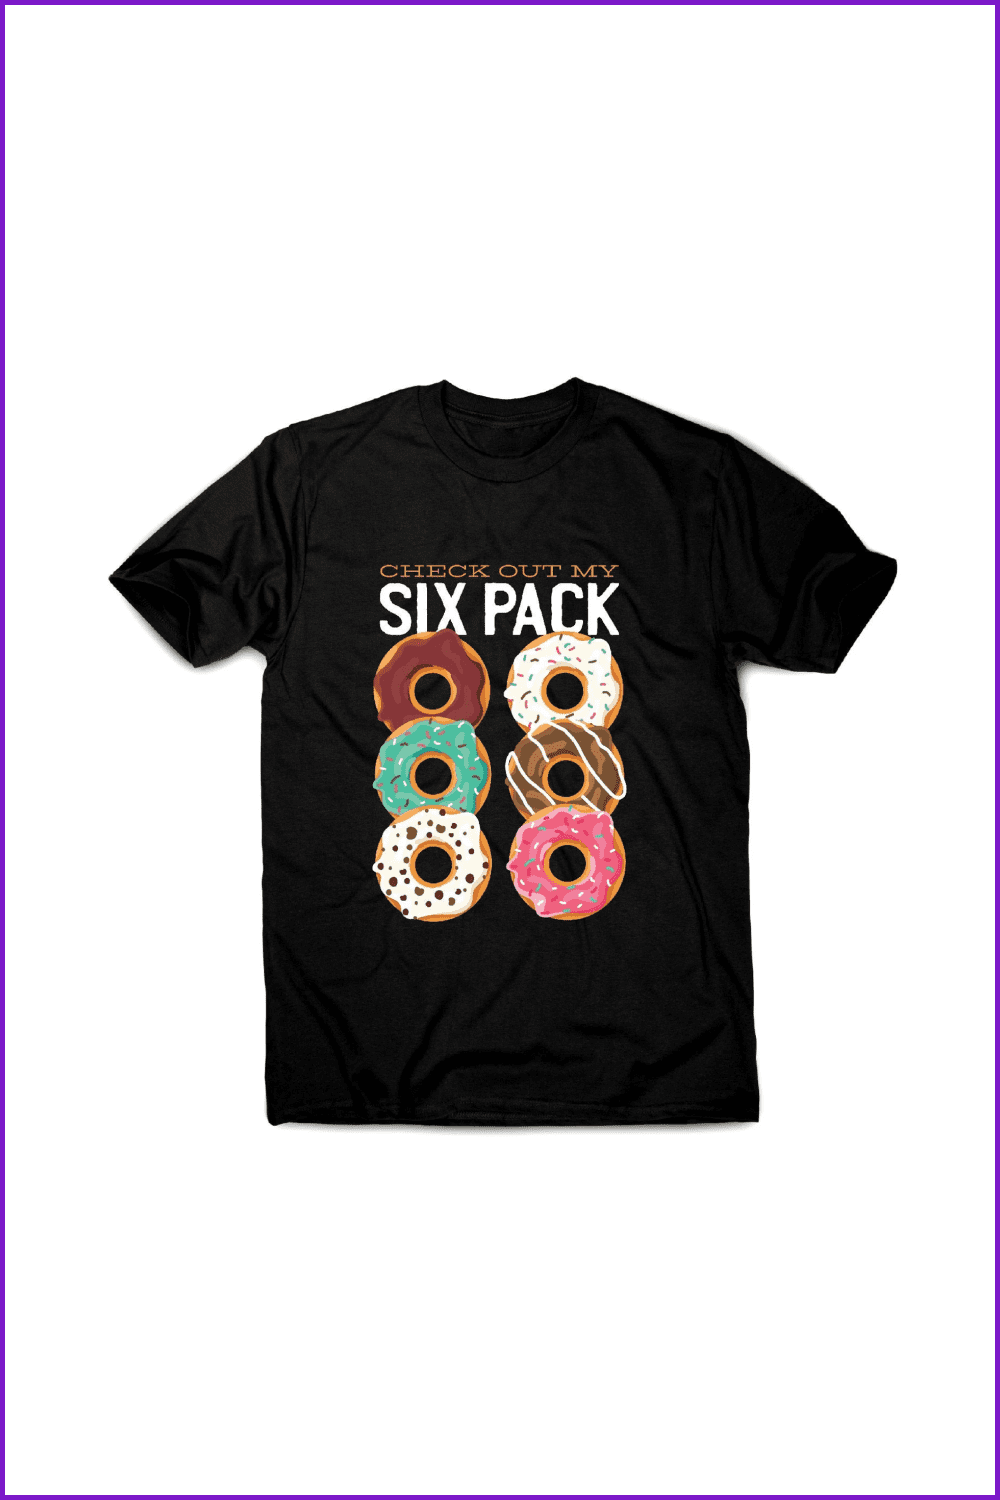 Donut six pack - Men's Funny Premium T-Shirt.